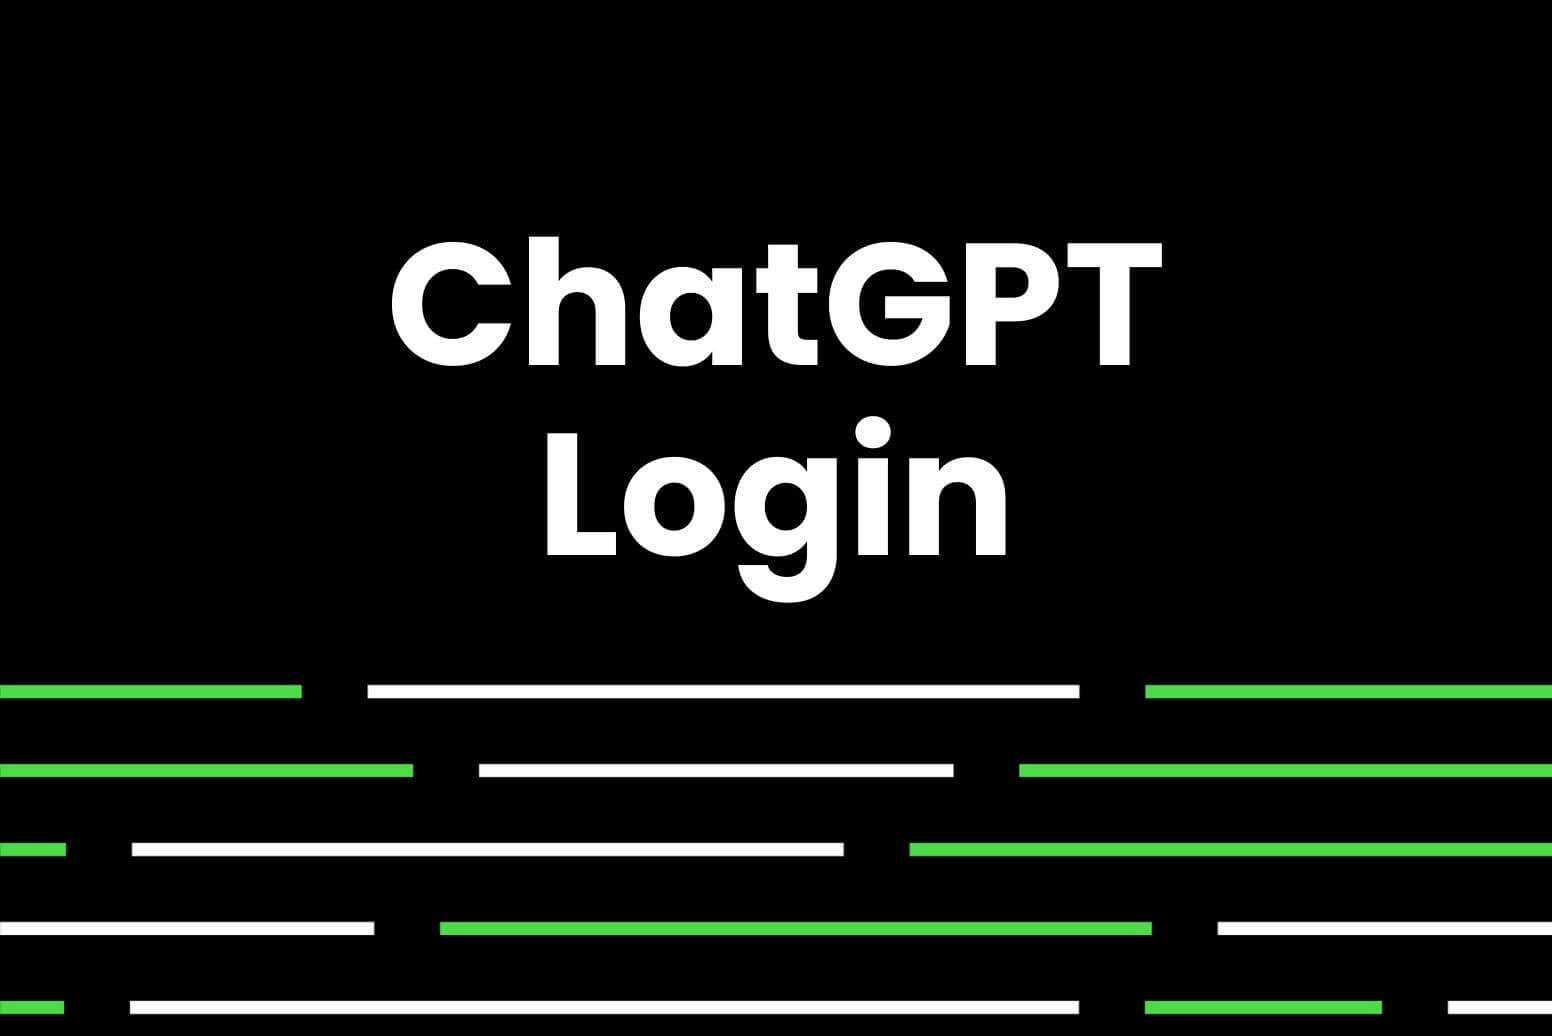 Chat GPT login